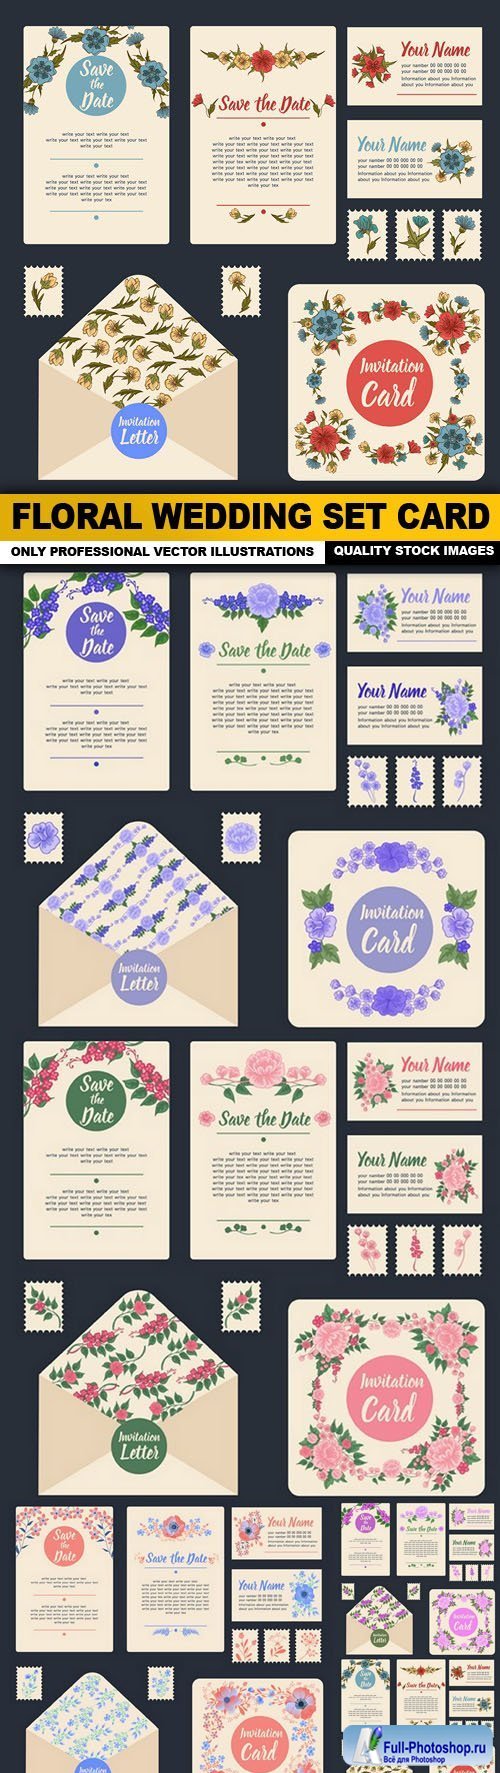 Floral Wedding Set Card - 5 Vector